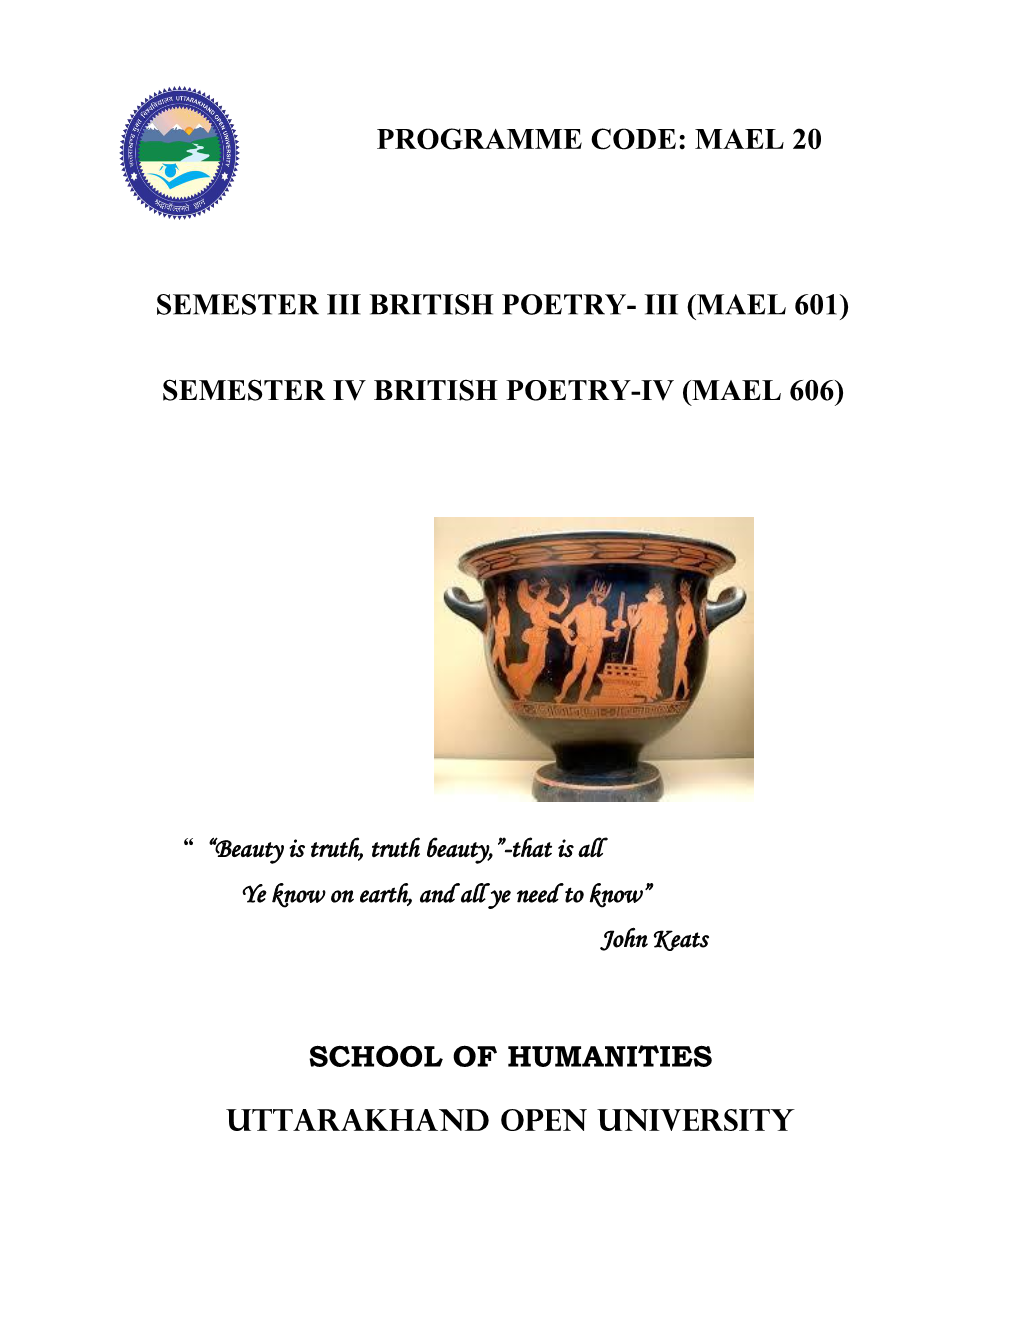 Semester Iv British Poetry-Iv (Mael 606)